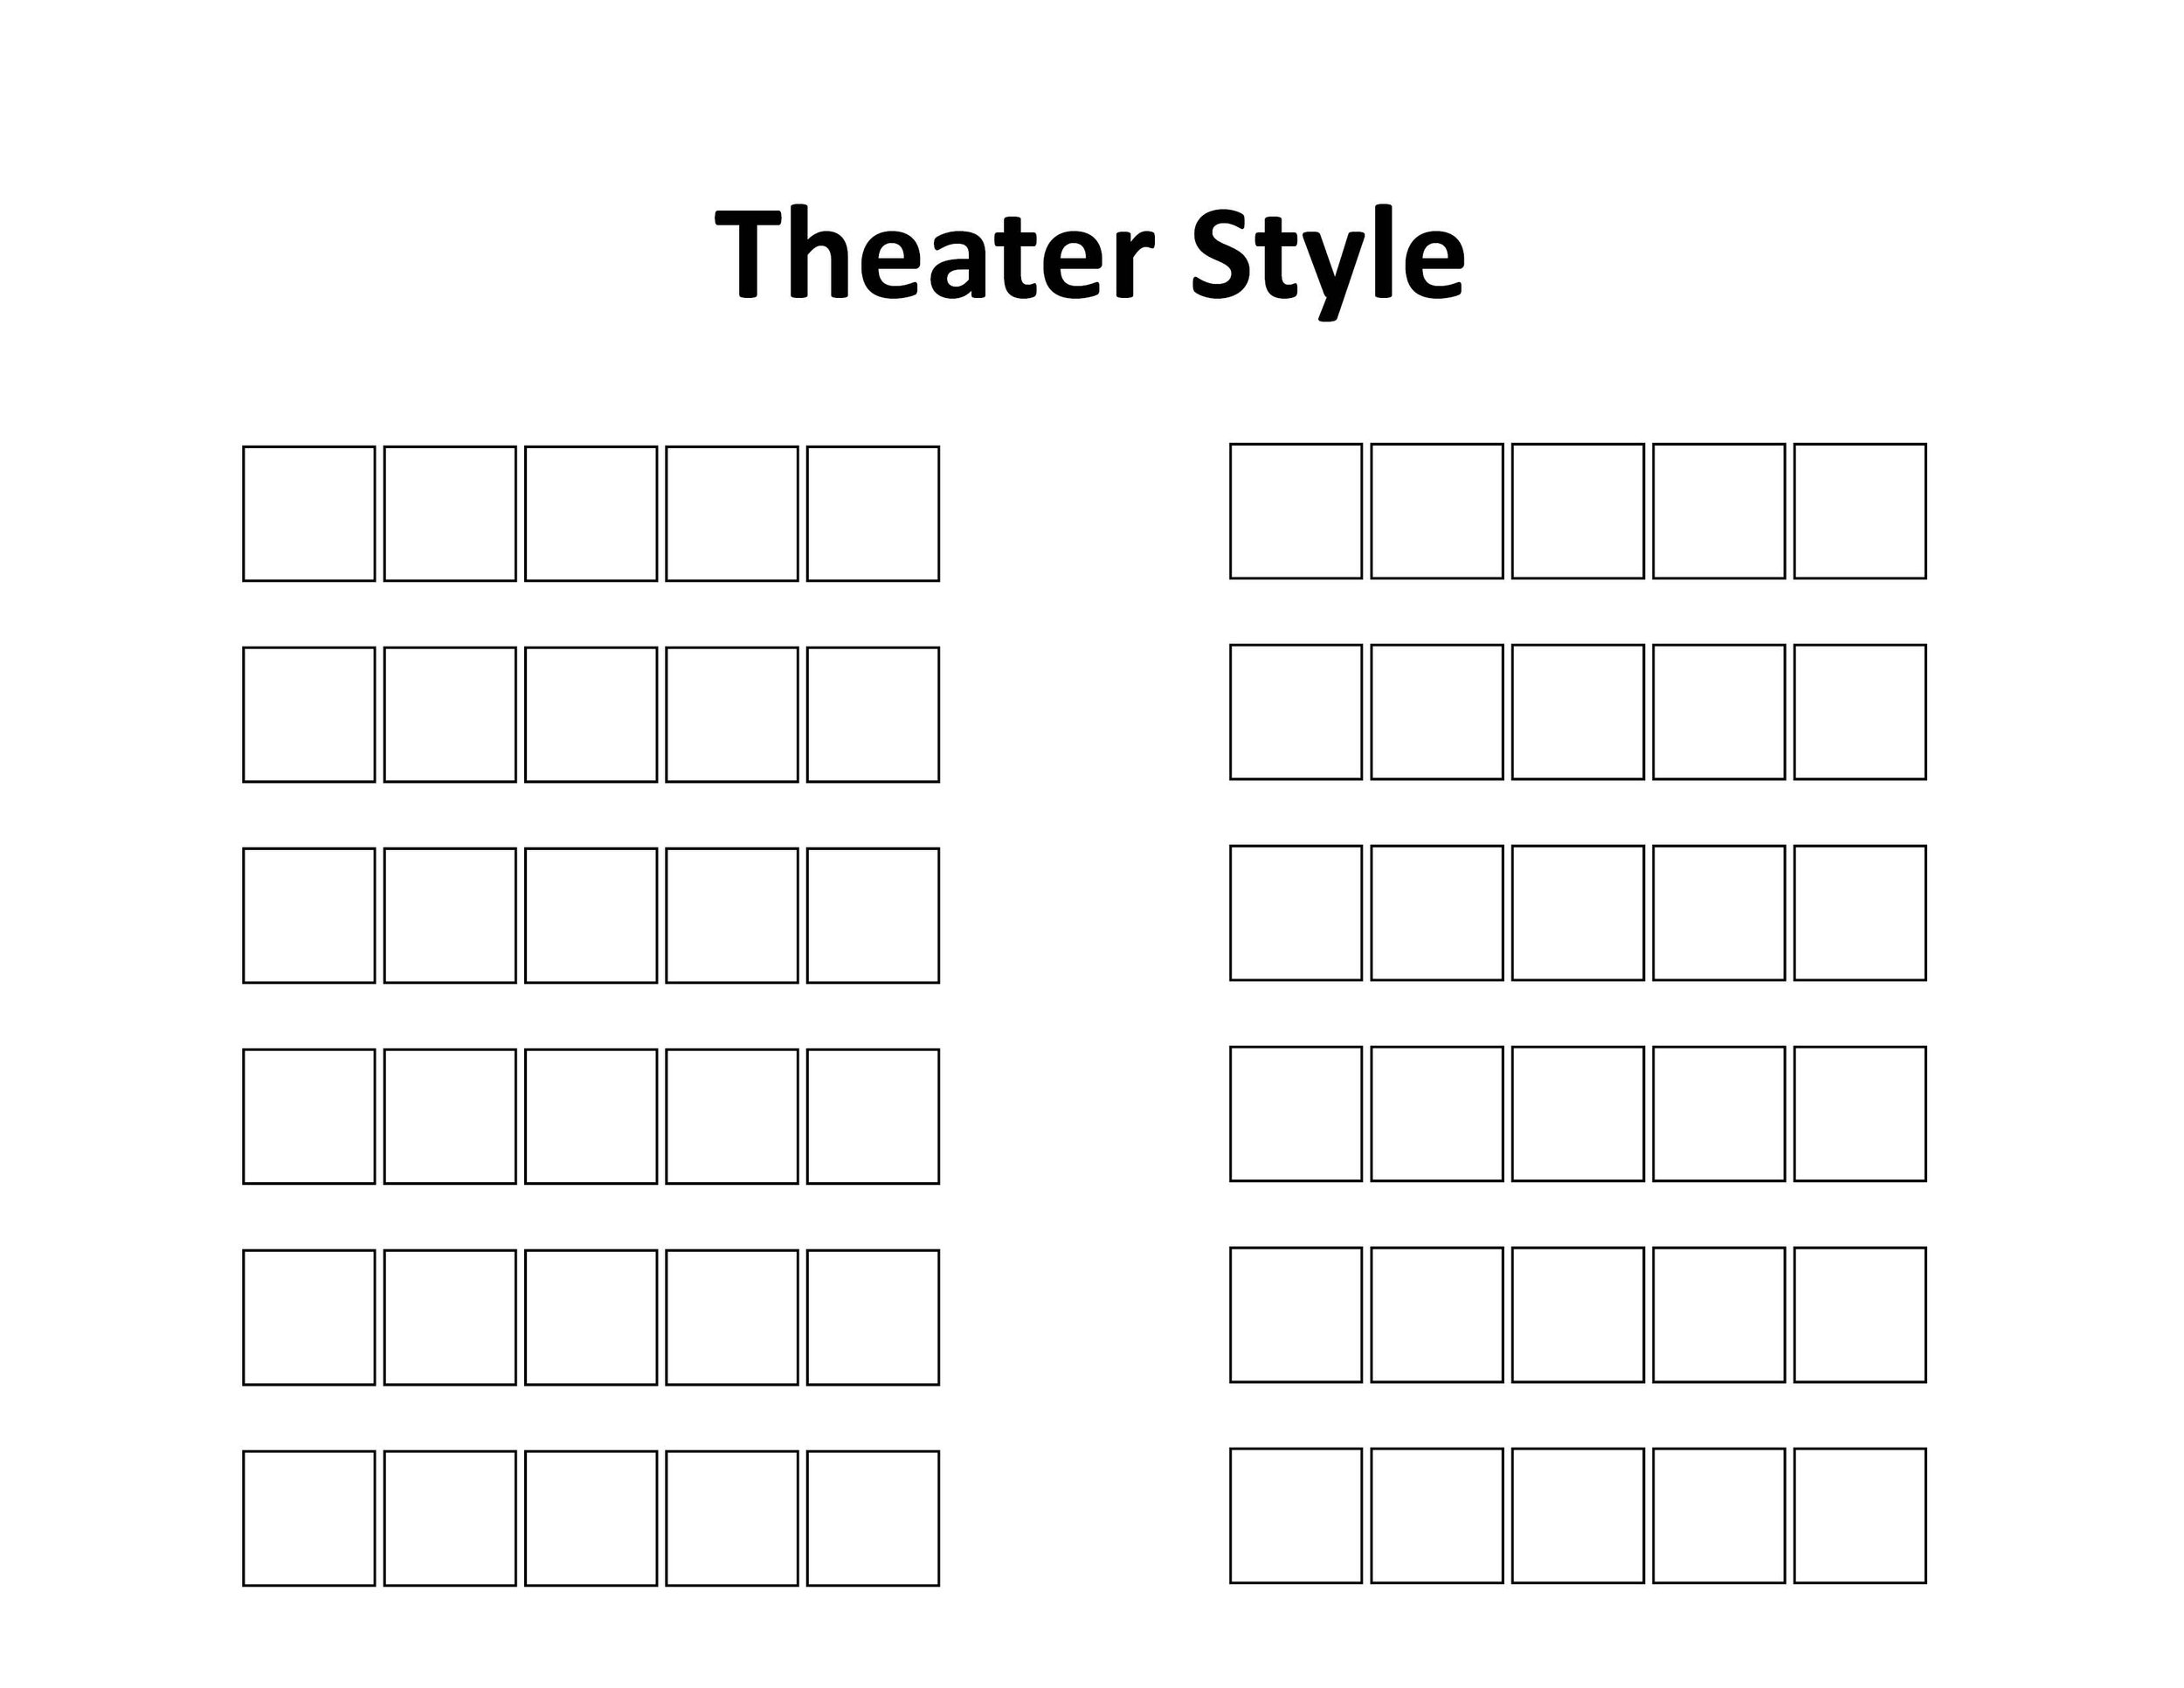 Theater Style (Maximum seating: 60)